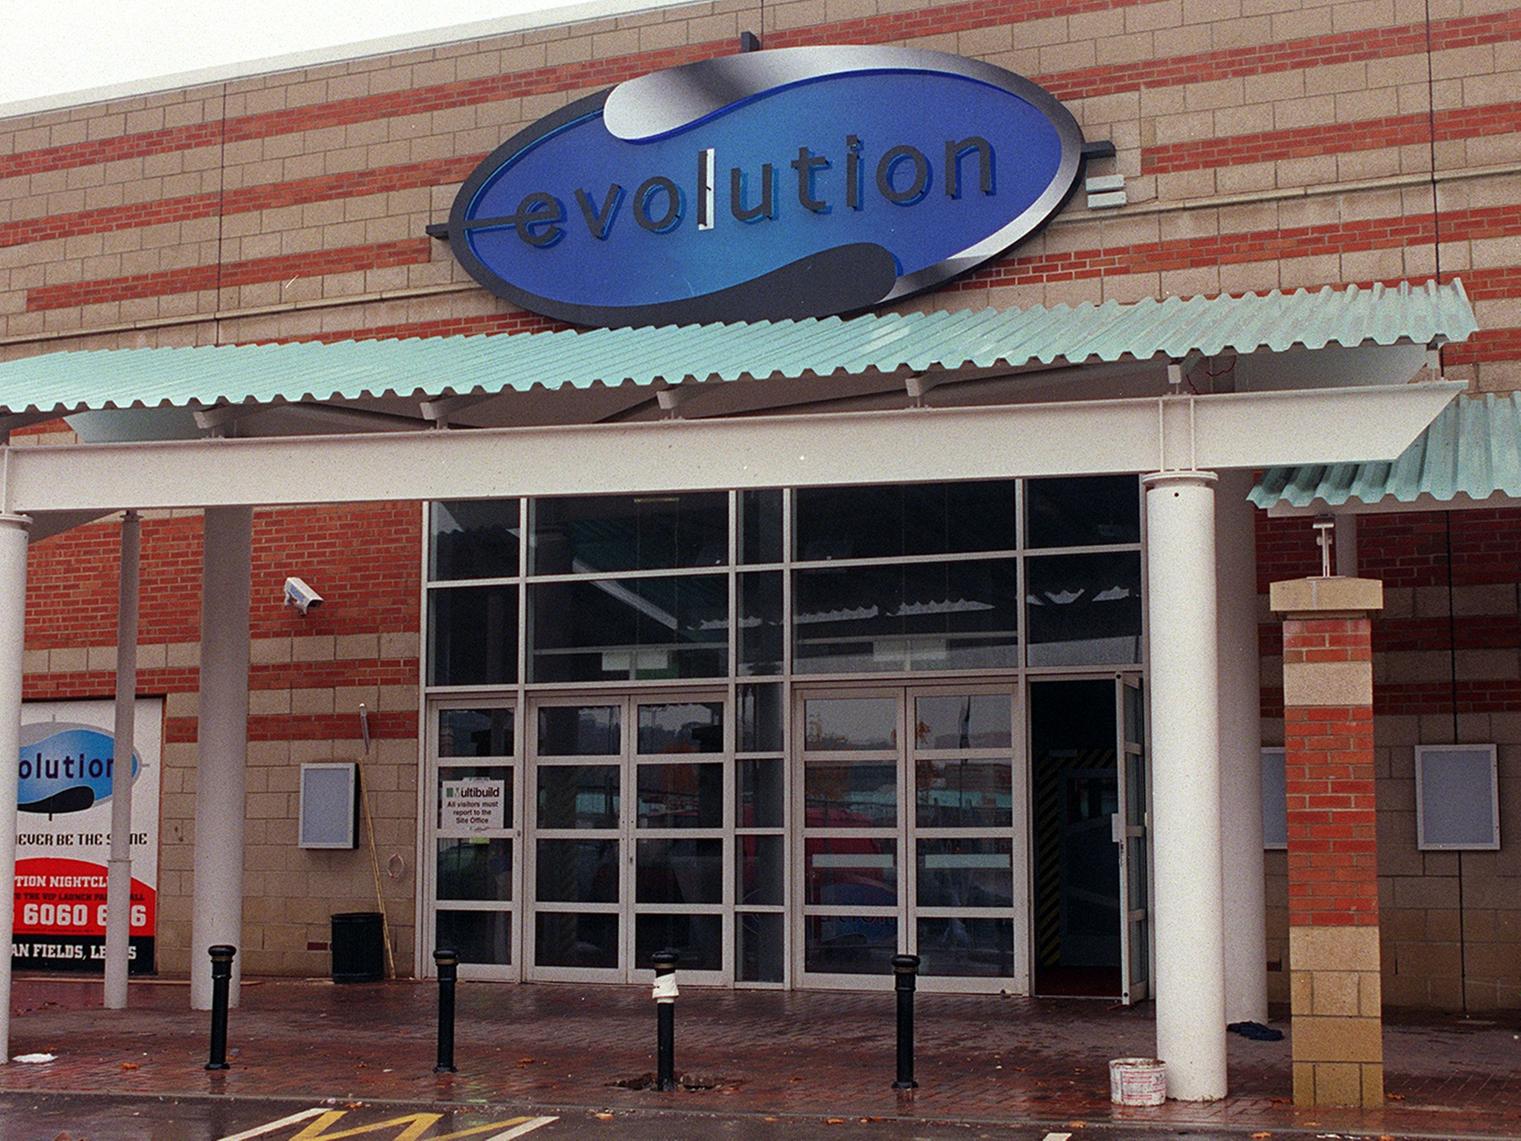 Remember Evolution nightclub?